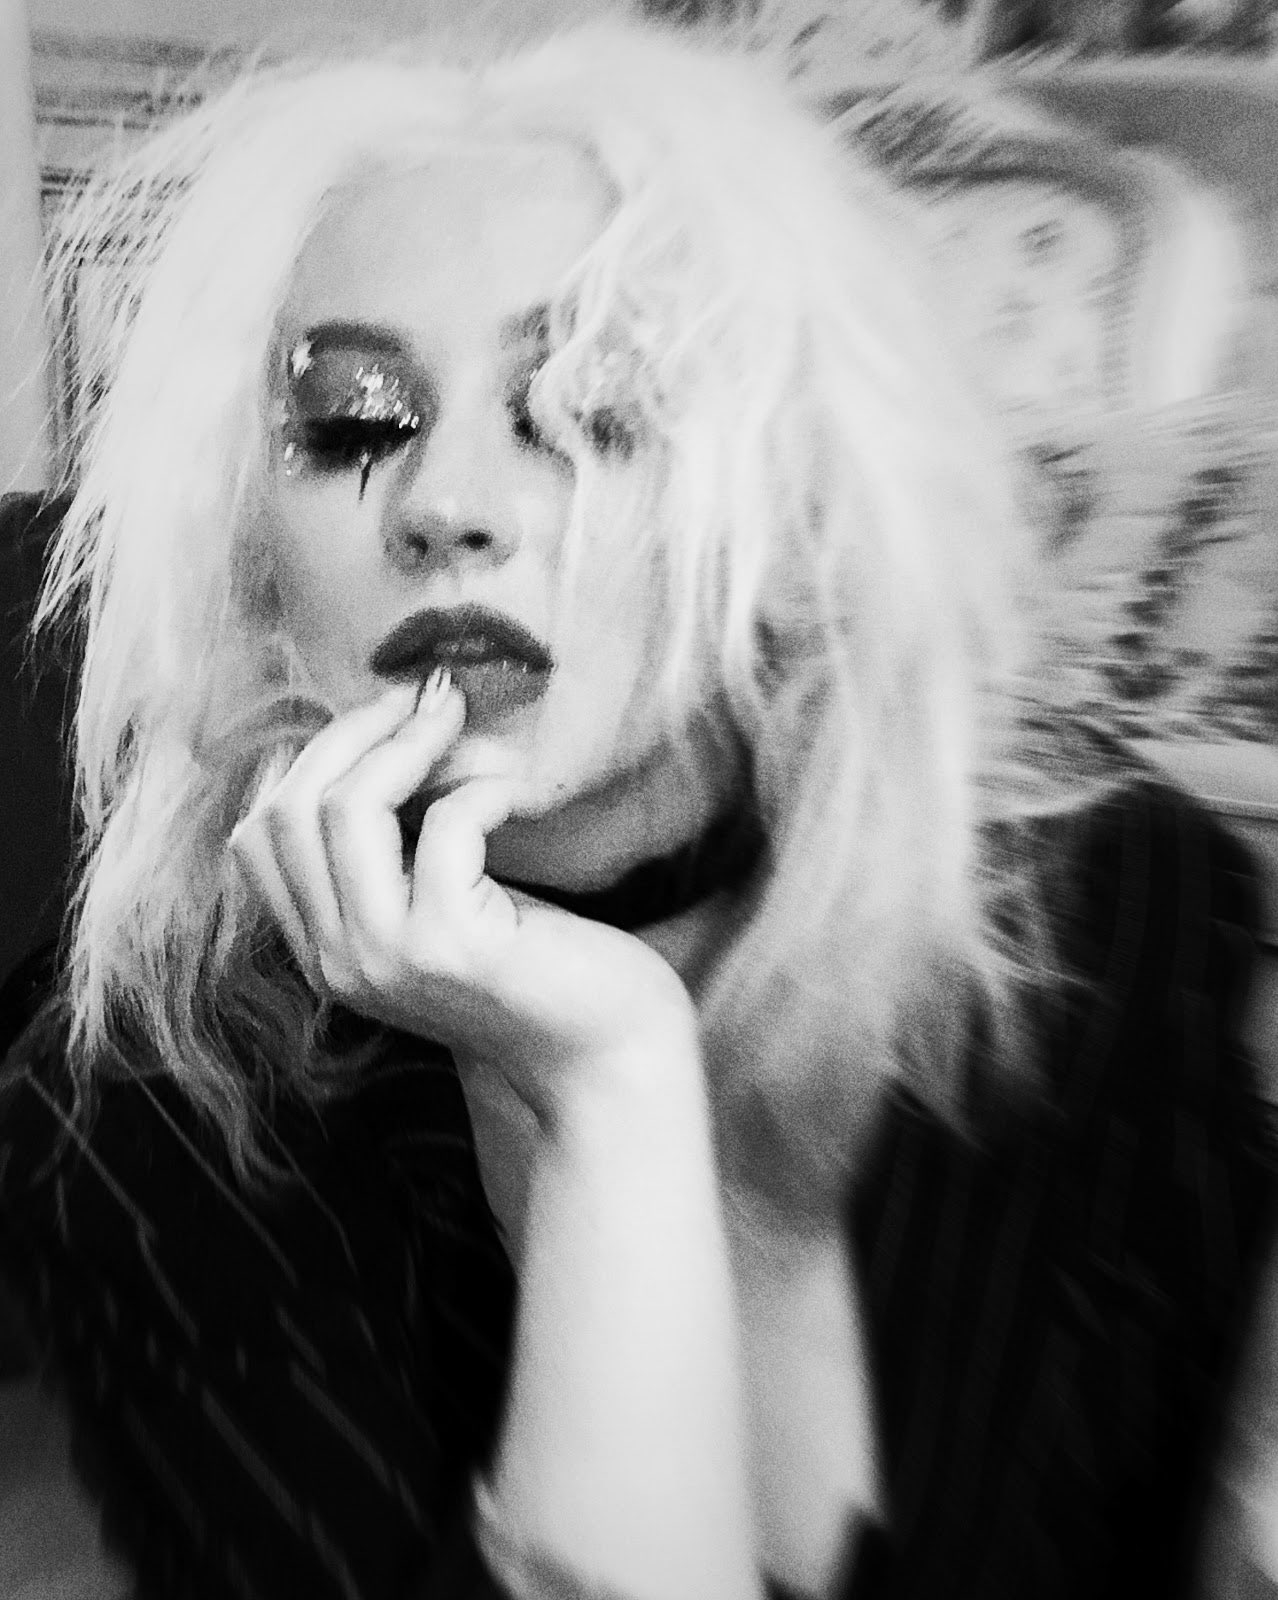 FOTOS Christina Aguilera se est poniendo espeluznante! - Photo 1